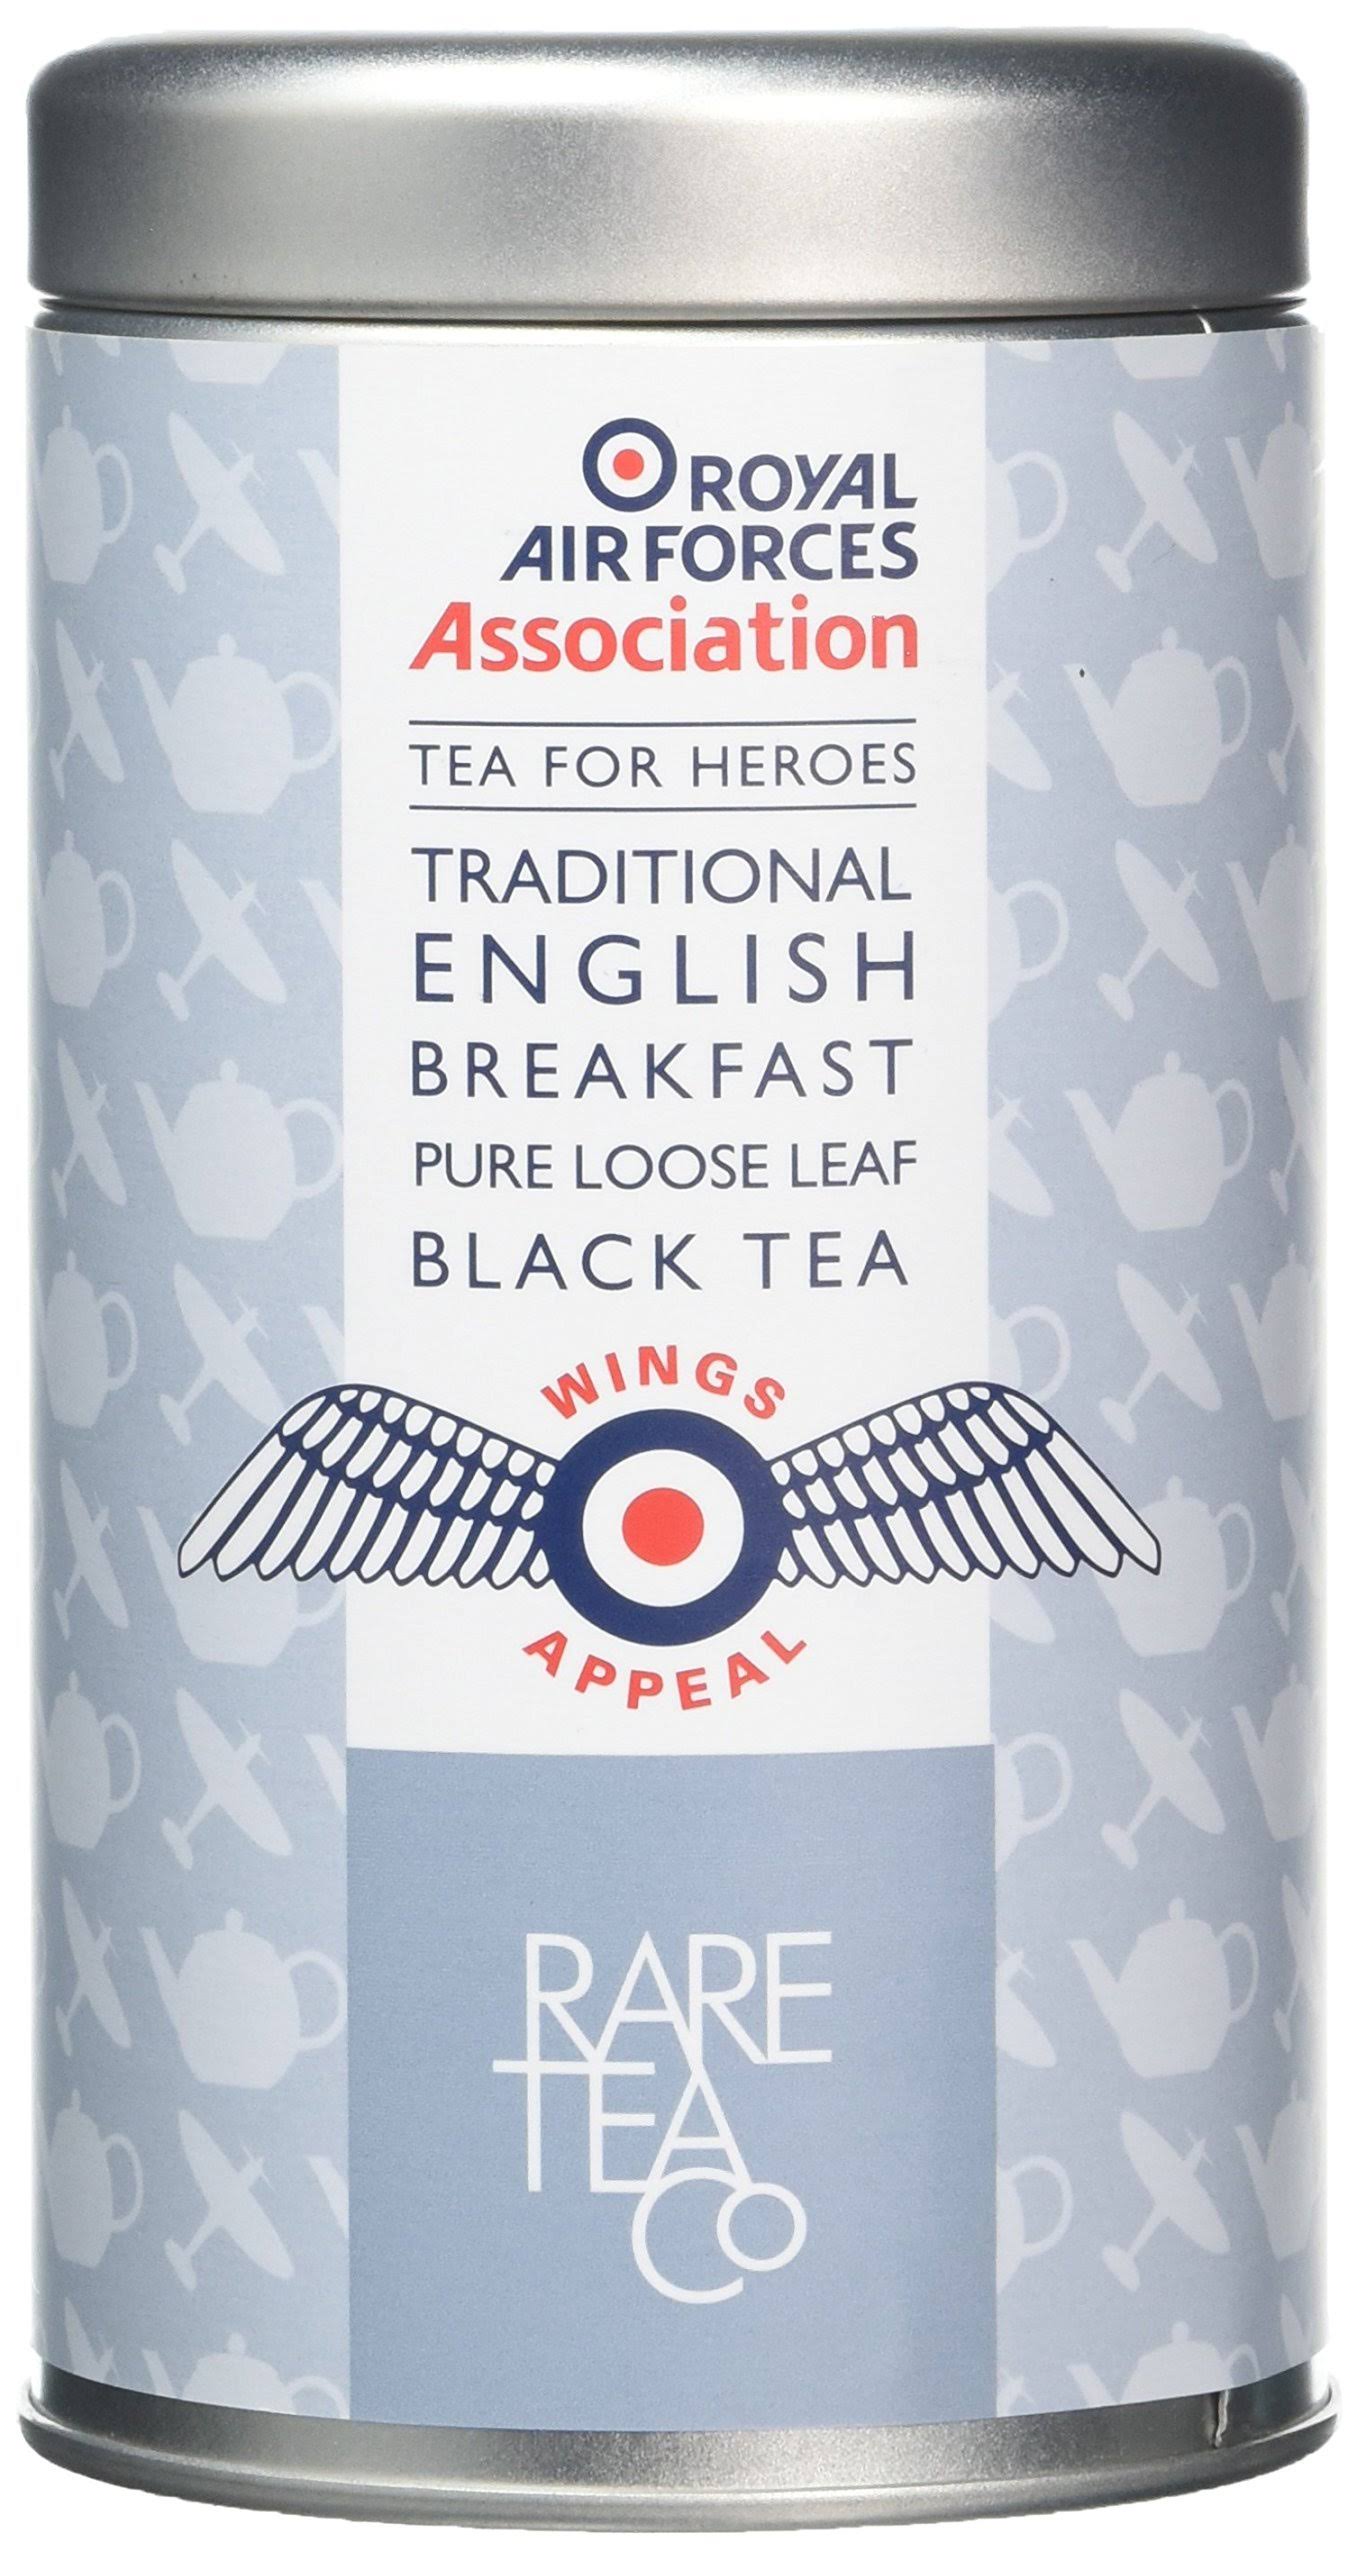 Rare Tea Company RAF Tea for Heroes, 50g Tin